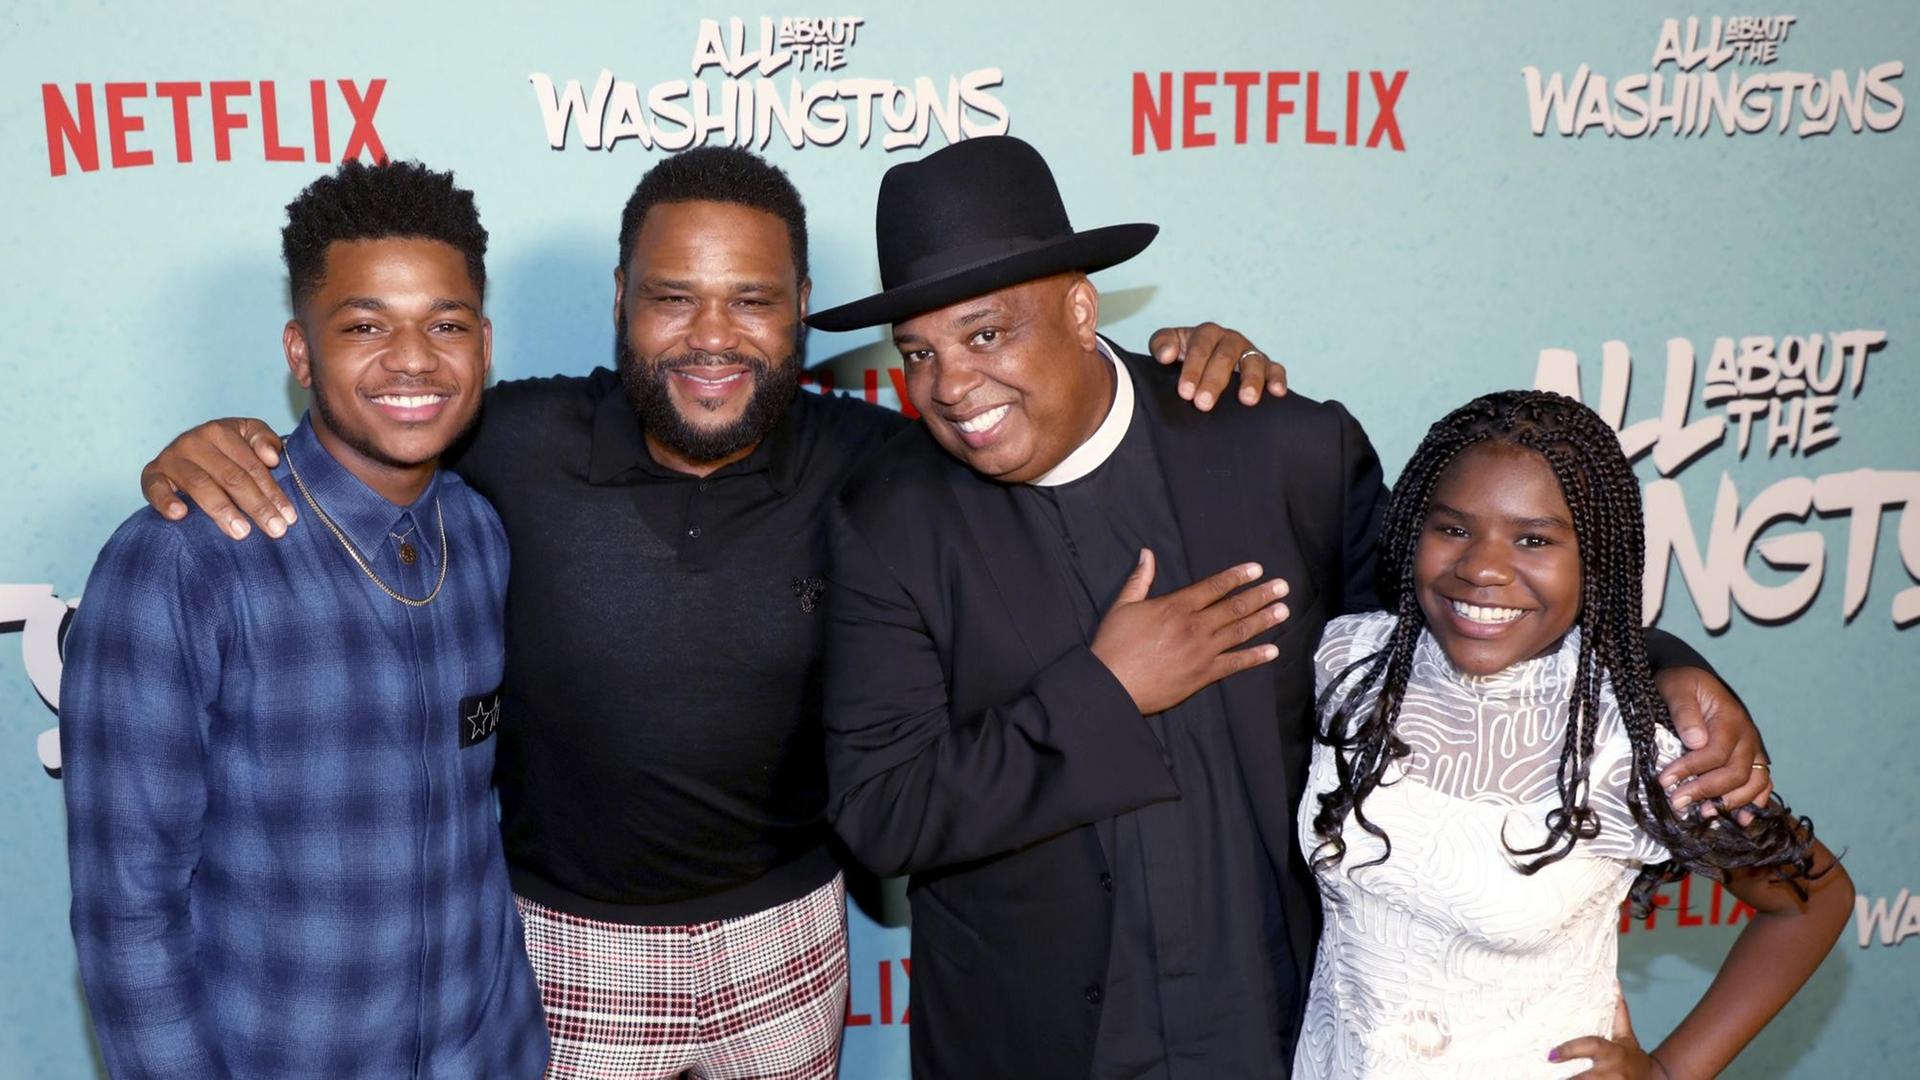 Anthony Anderson, Nathan Anderson, Joseph Simmons und Trinitee Stokes bei der Netflix Premieren-Party von "All About the Washingtons"